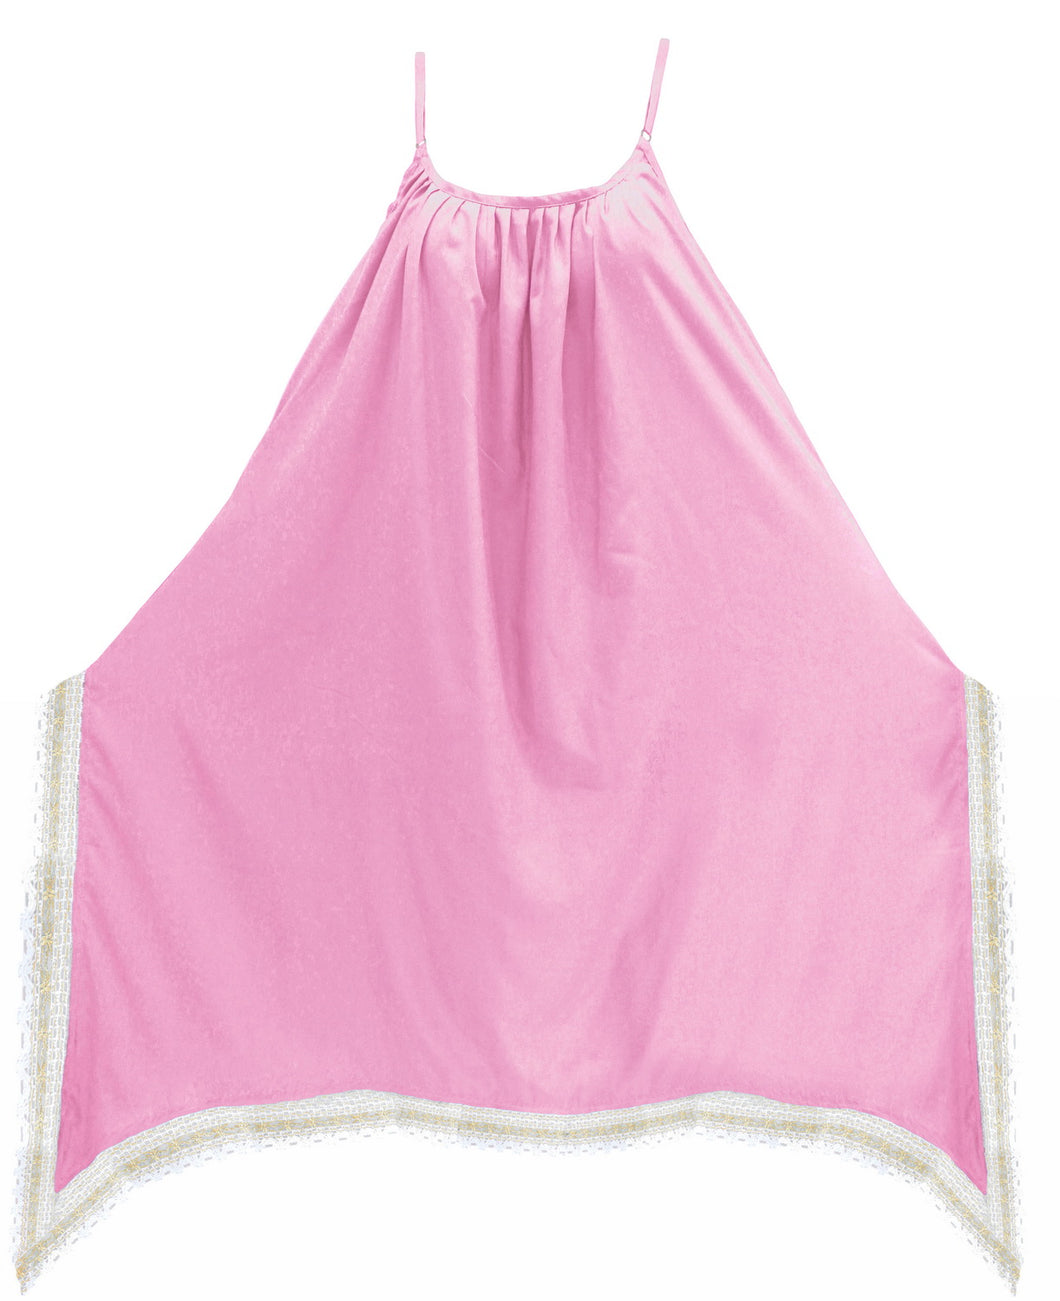 Women's Dress Sundress Beachwear Plus Size Evening Casual TOP Cover ups  Pink